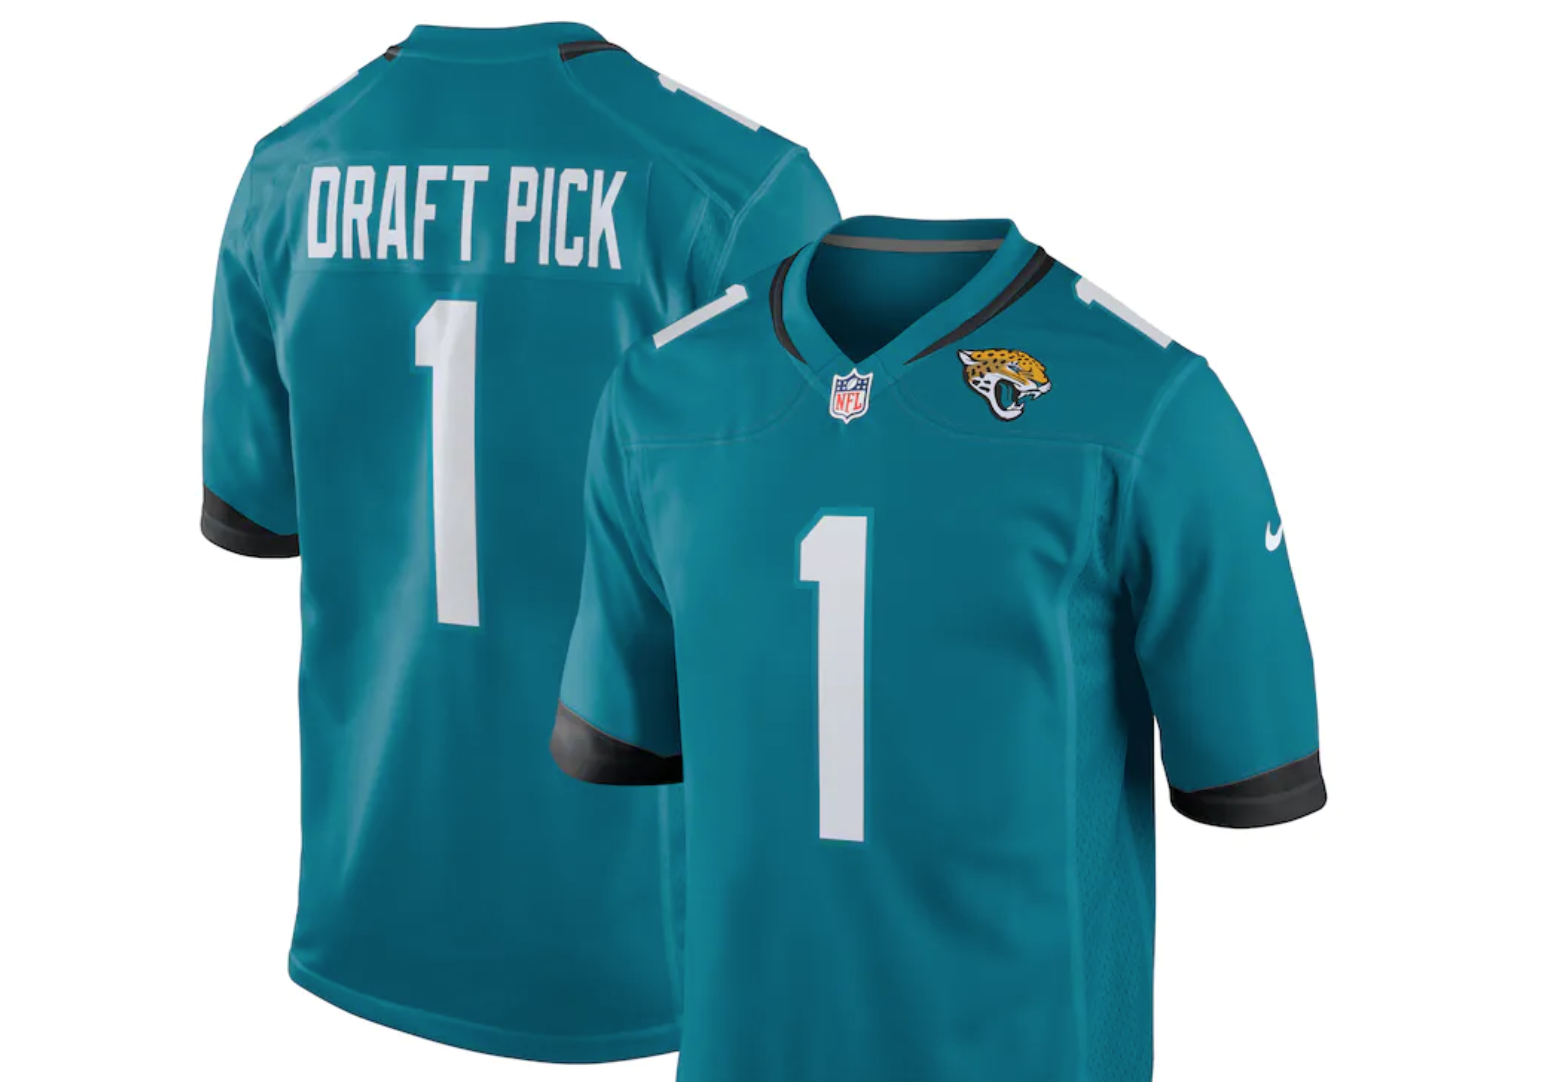 NFL Draft 2021 jerseys: Where to buy No. 1 pick jerseys for Trevor ...